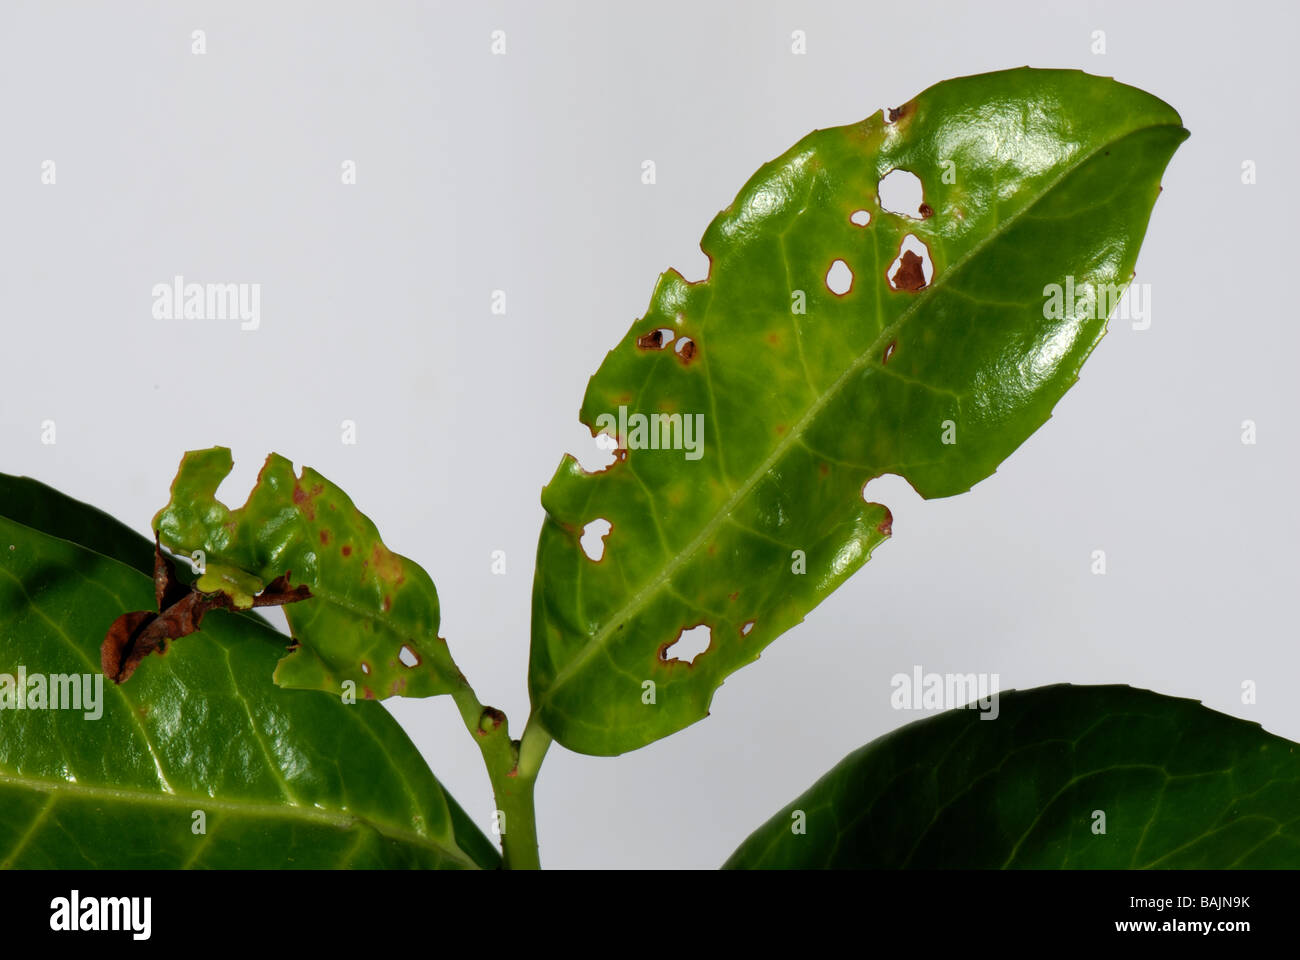 Bacterial shot hole Xanthomonas pruni symptoms in cherry laurel leaf Stock Photo